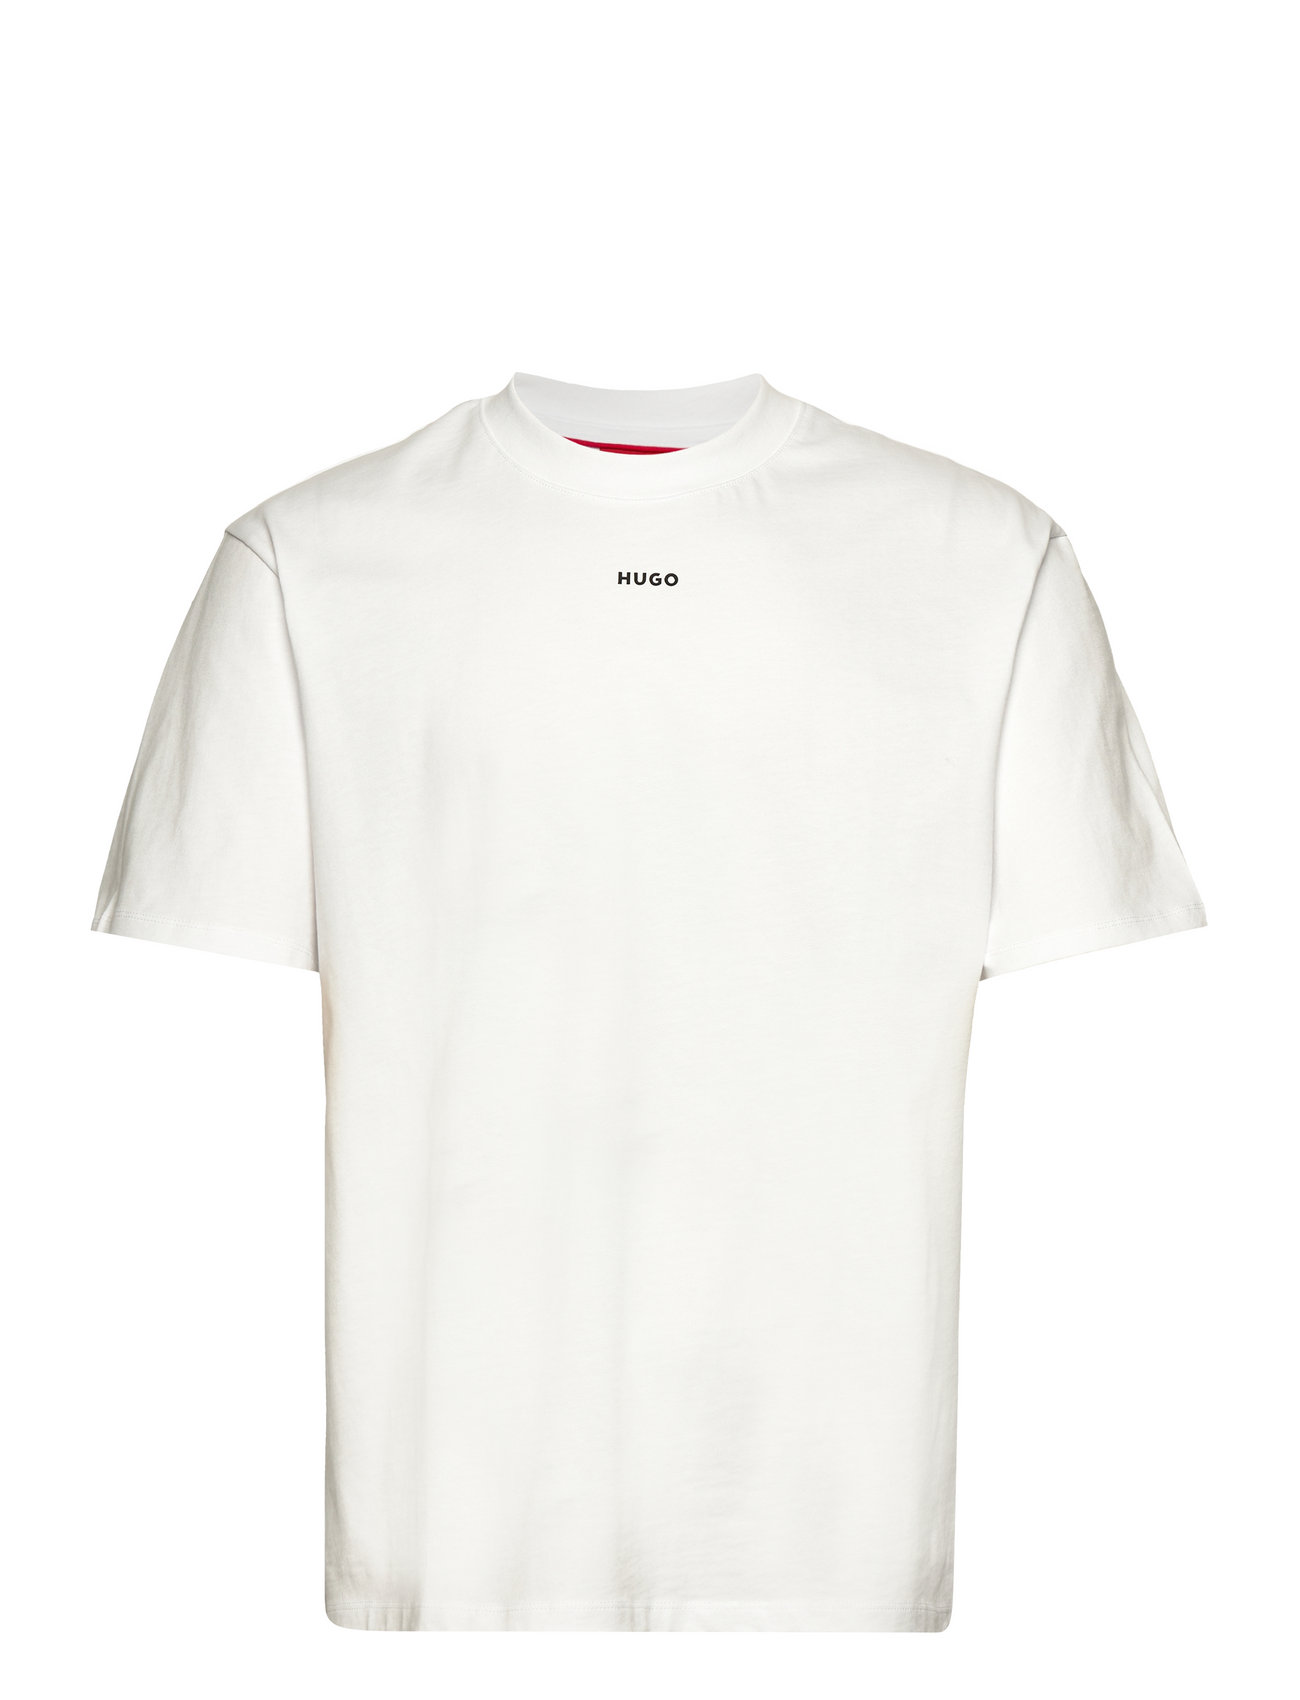 HUGO Dapolino - T-Shirts - Boozt.com